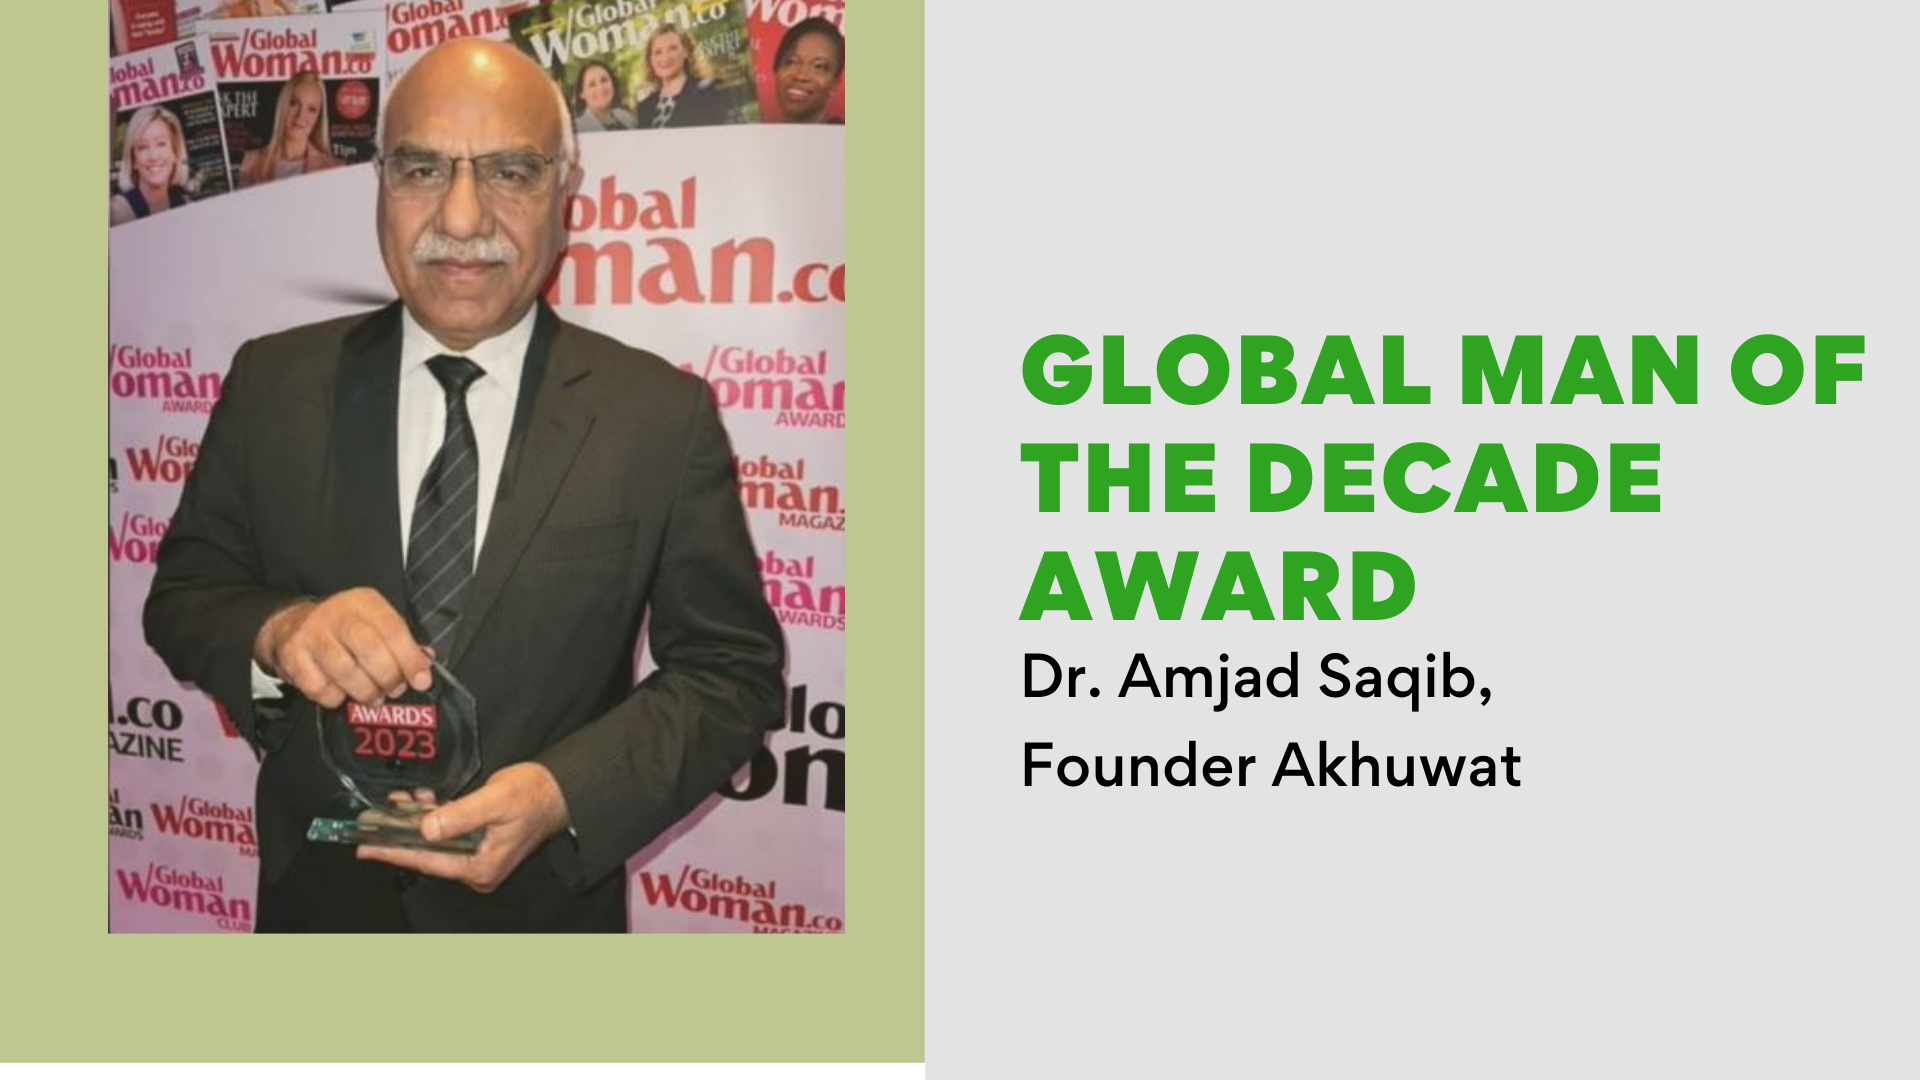 Global man of the decade | Amjad Saqib, Founder Akhuwat